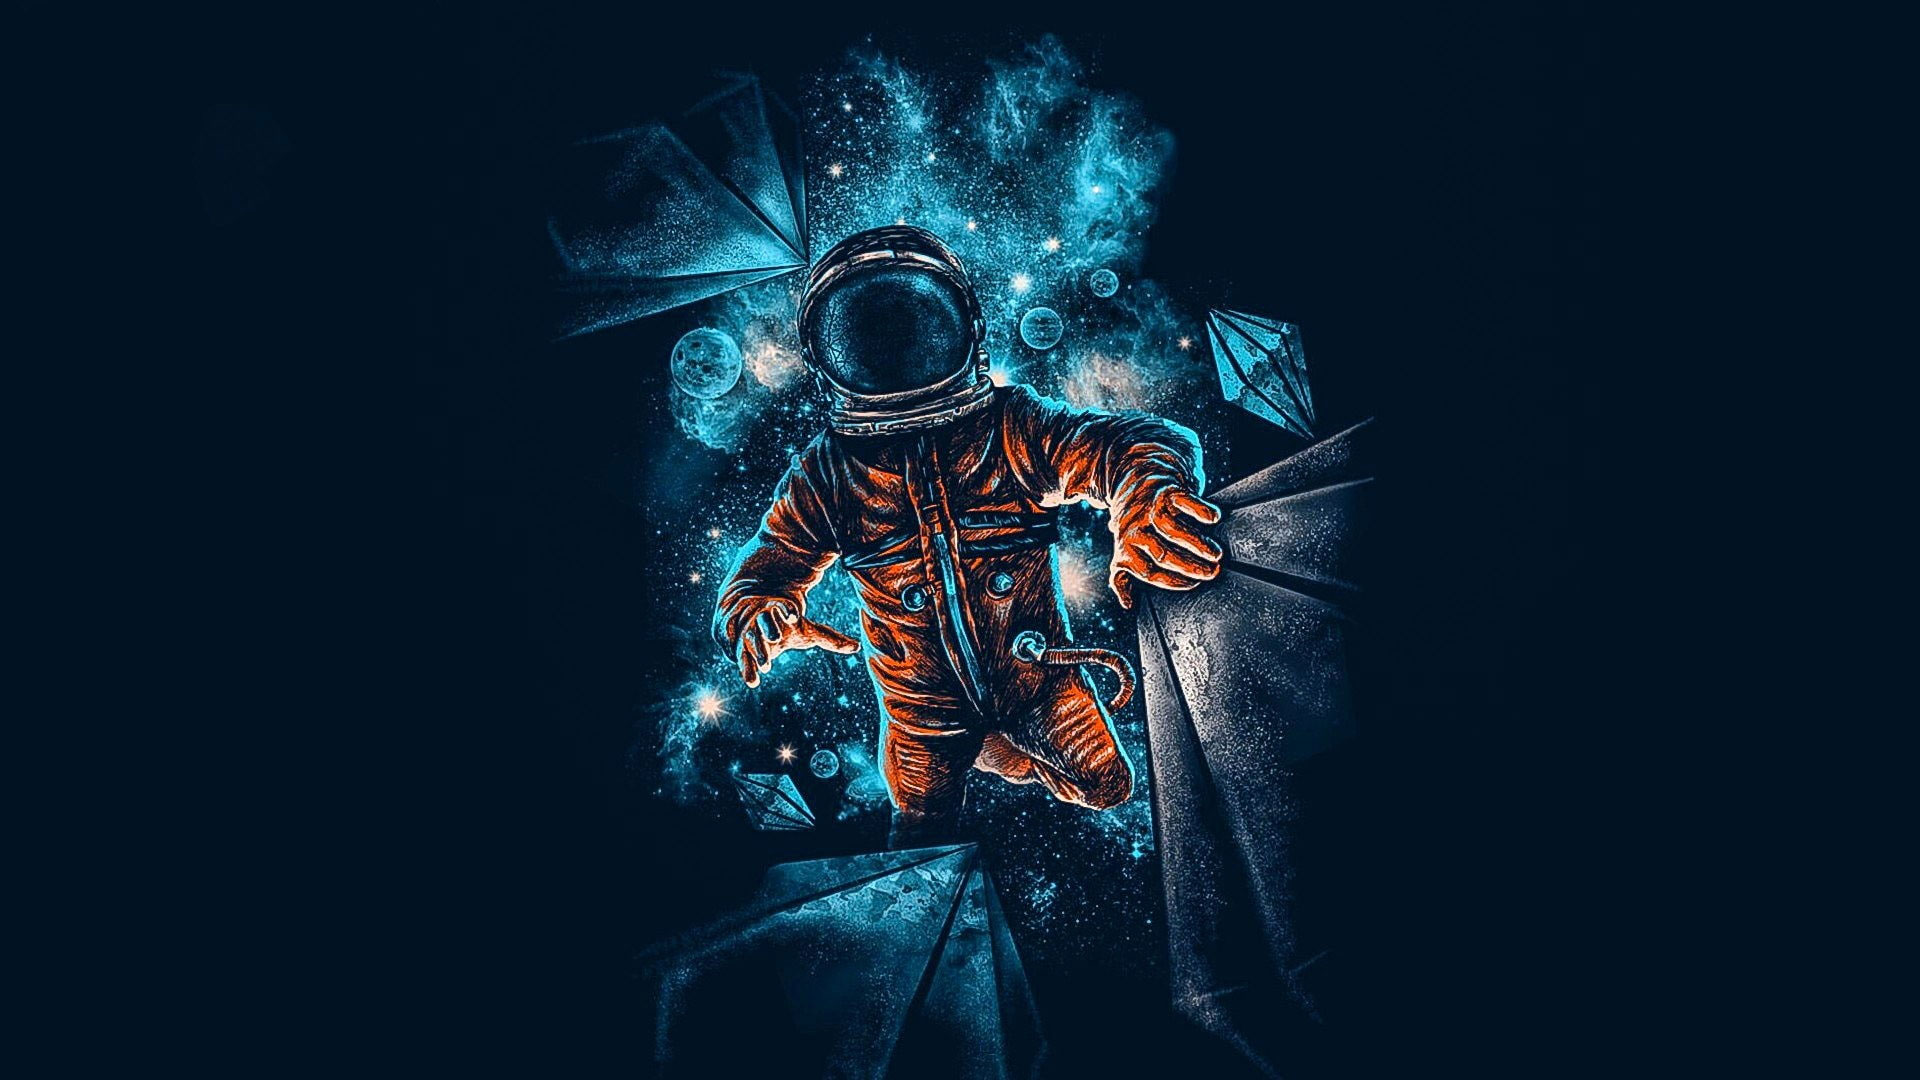 Astronaut, blue, space, dark, artwork, galaxy, graphics, cg artwork